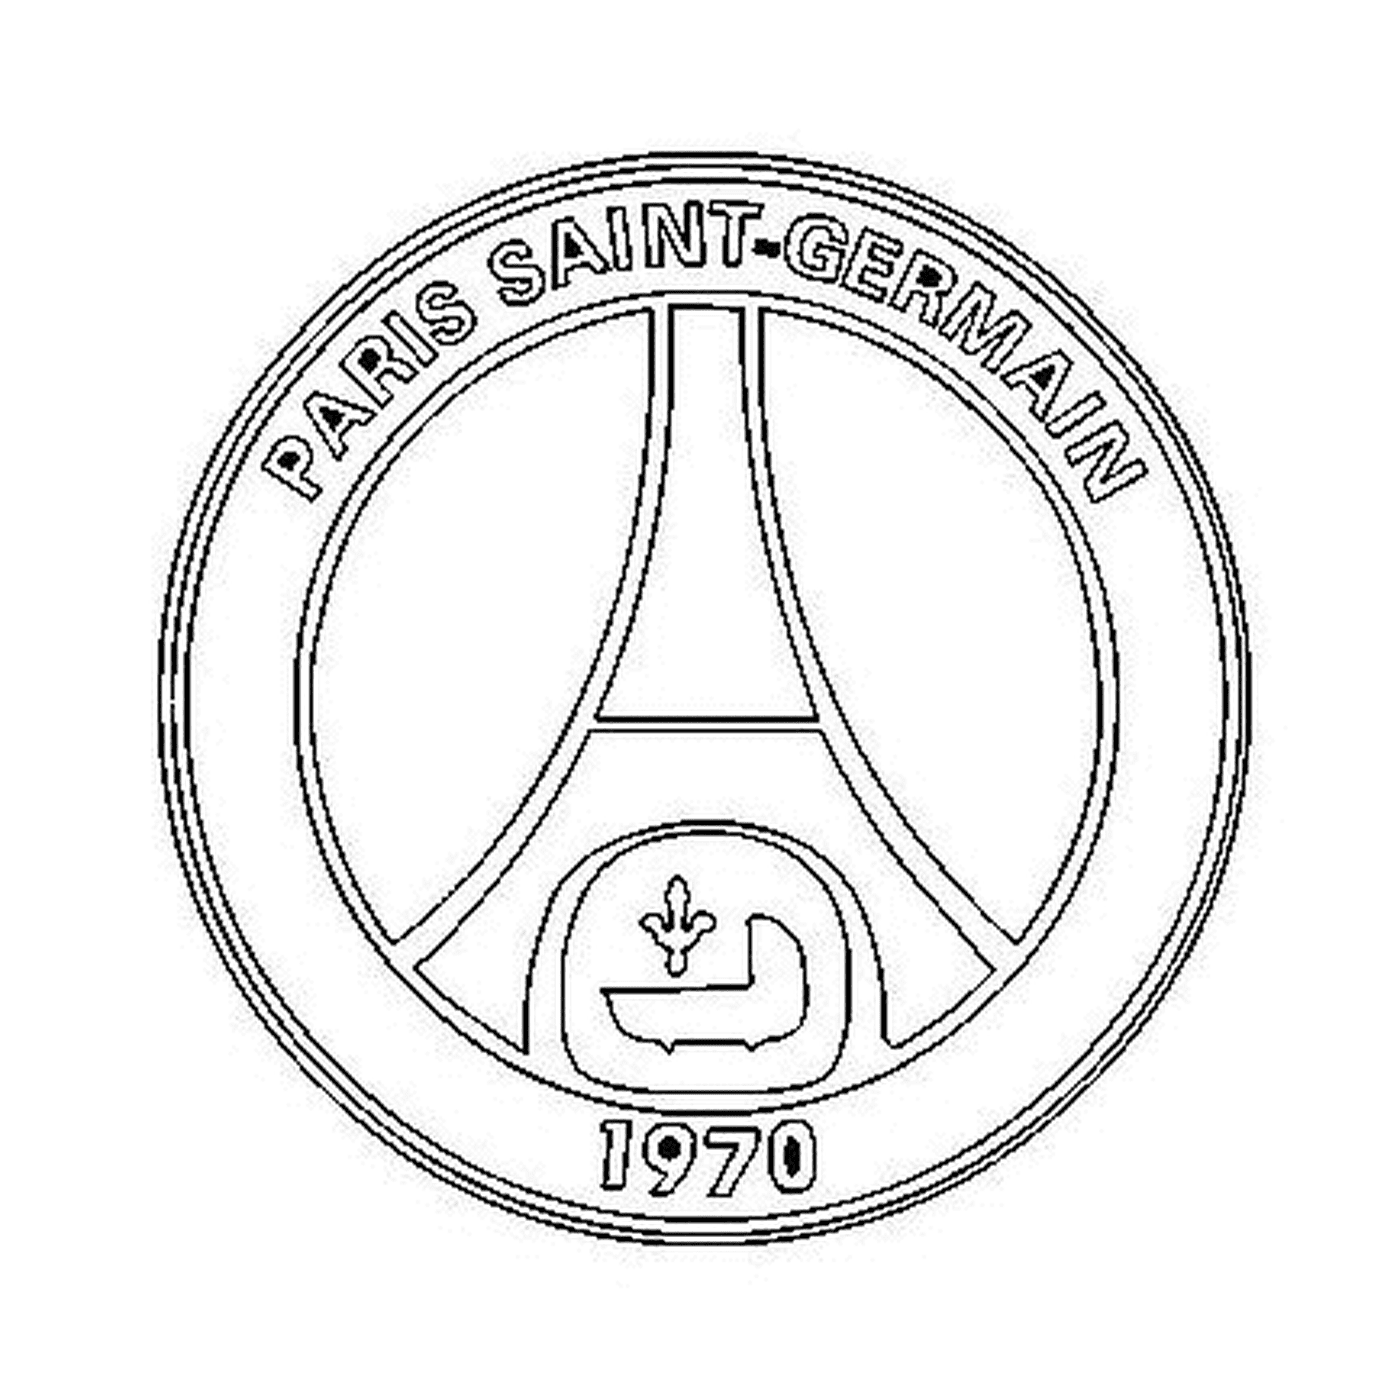  Logotipo de Paris Saint-Germain 